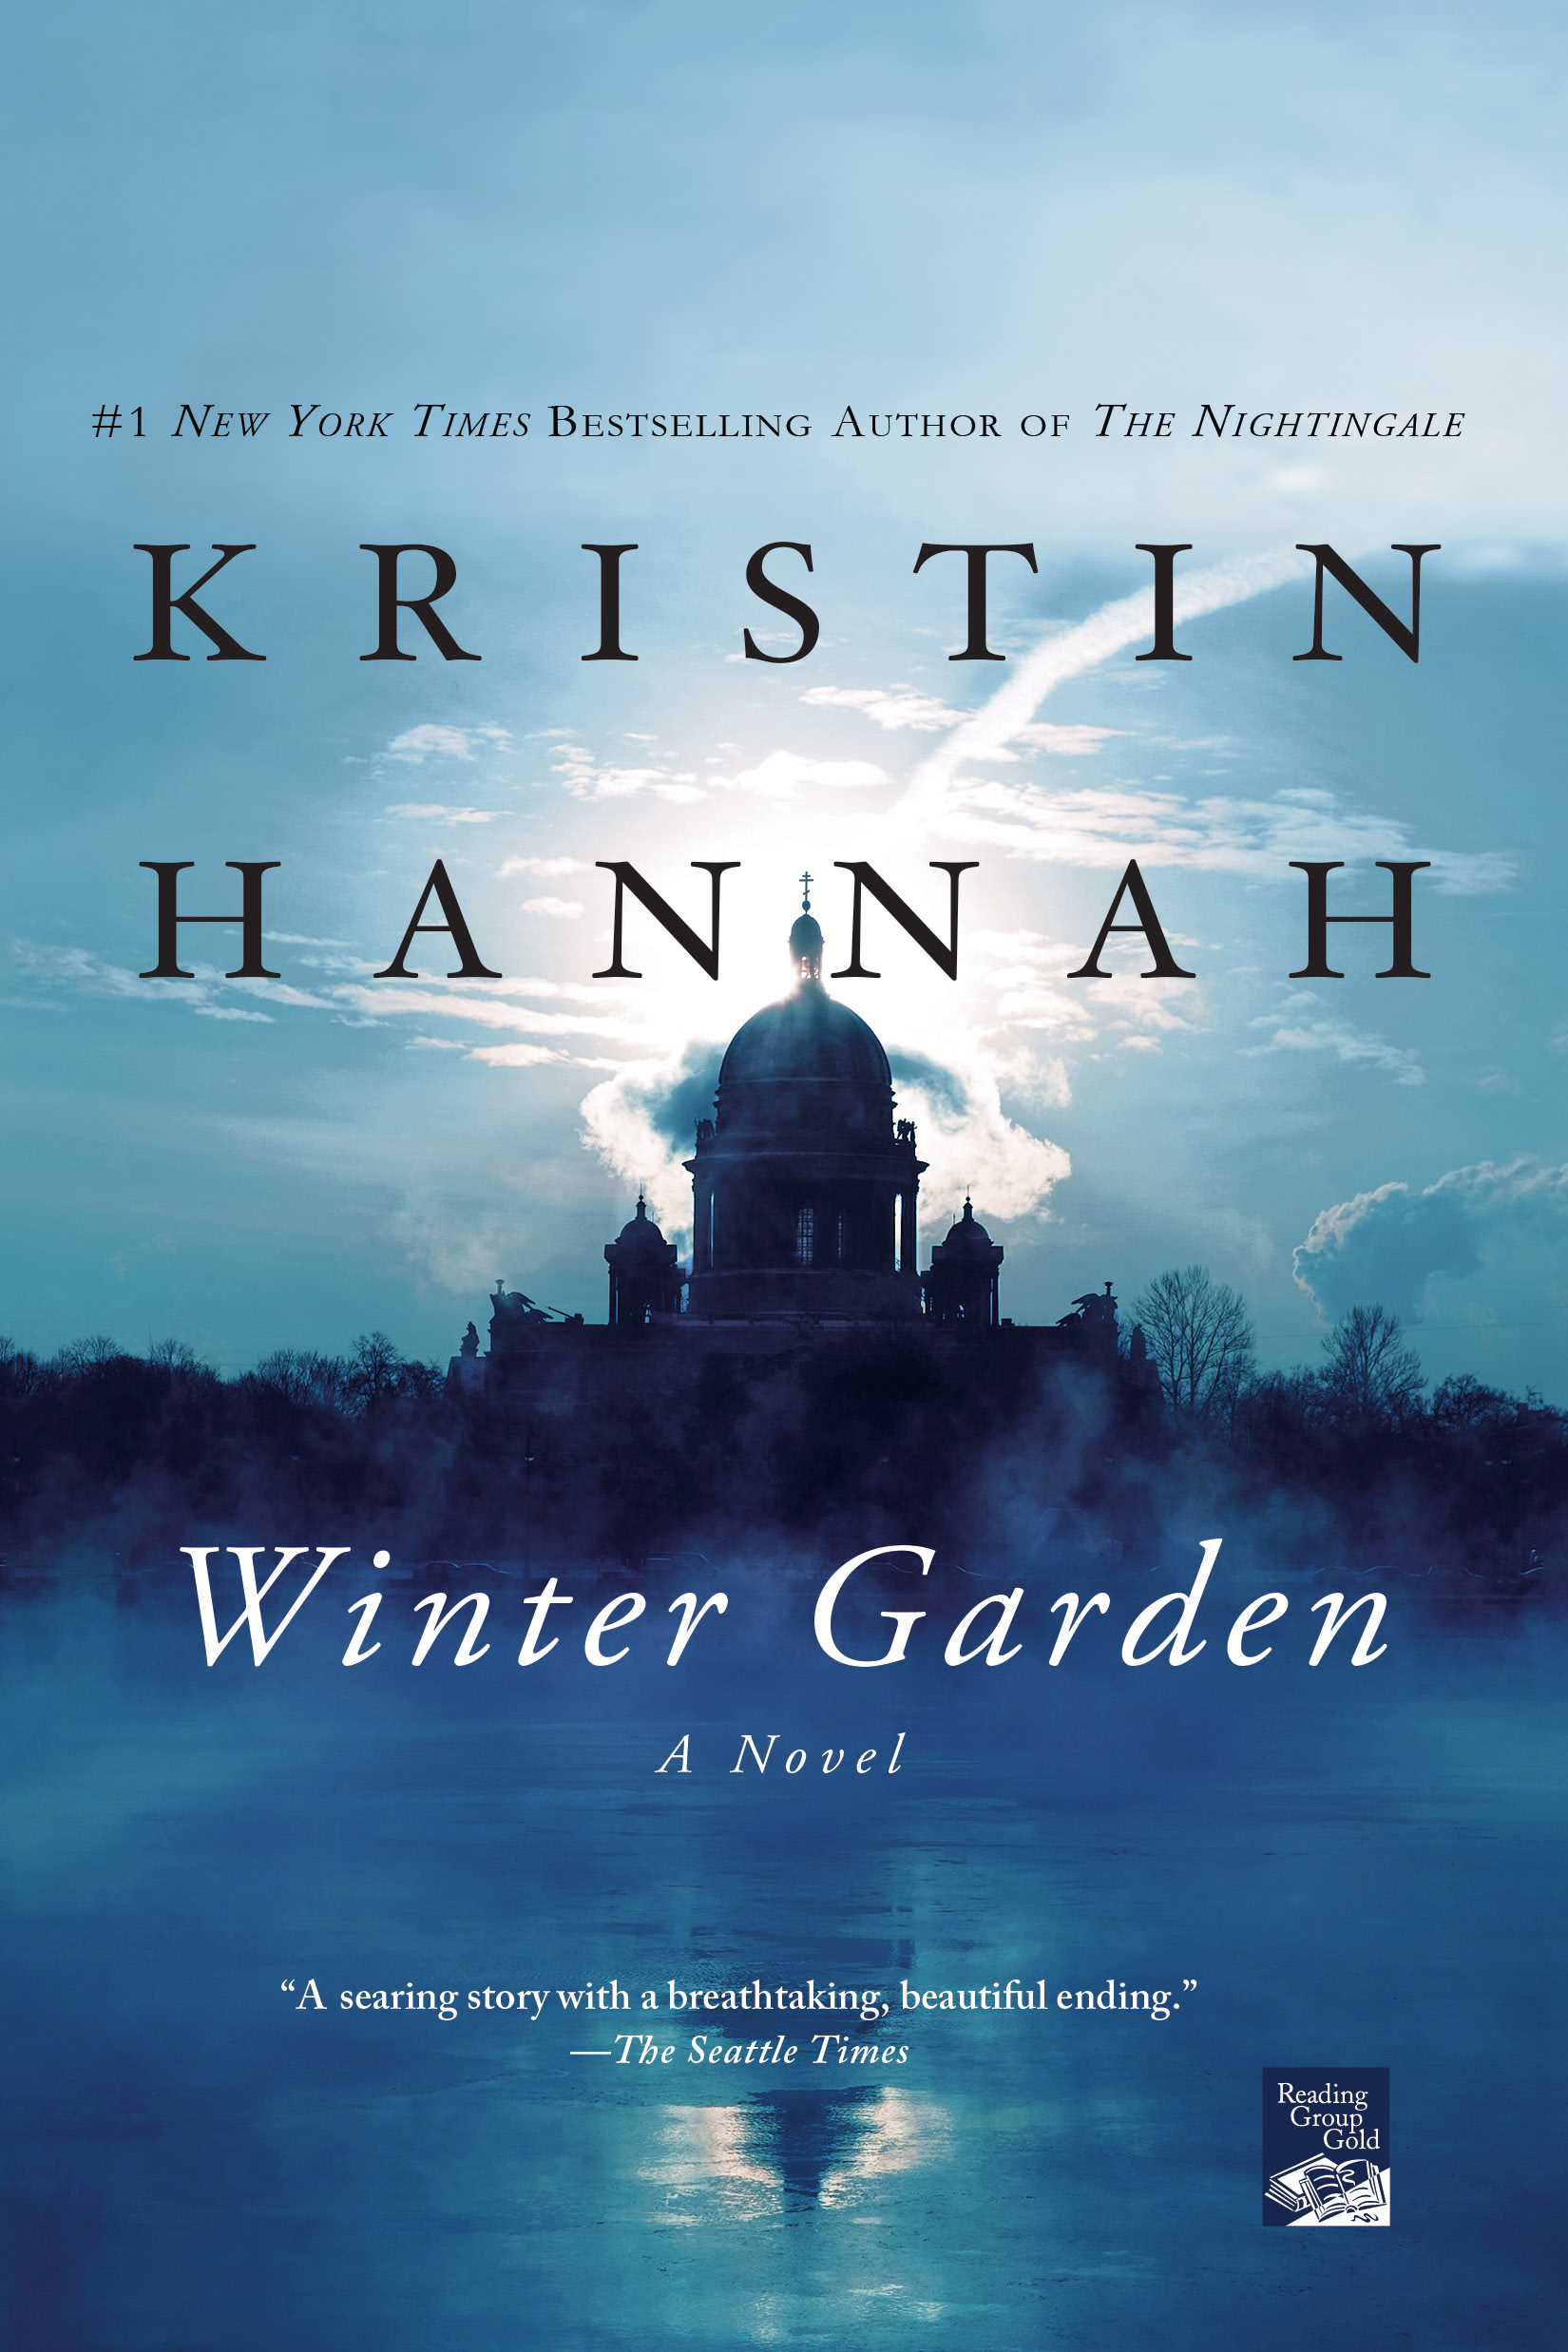 Book “Winter Garden” by Kristin Hannah — December 31, 2018